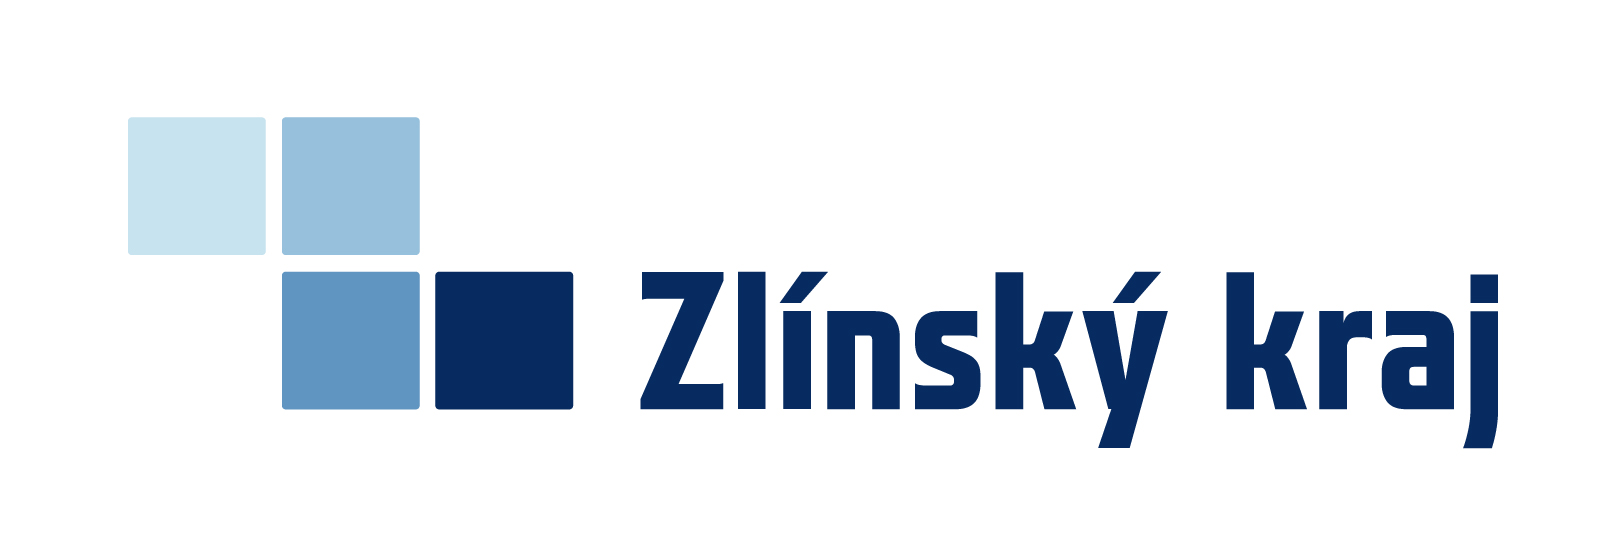 zlinsky kraj logo